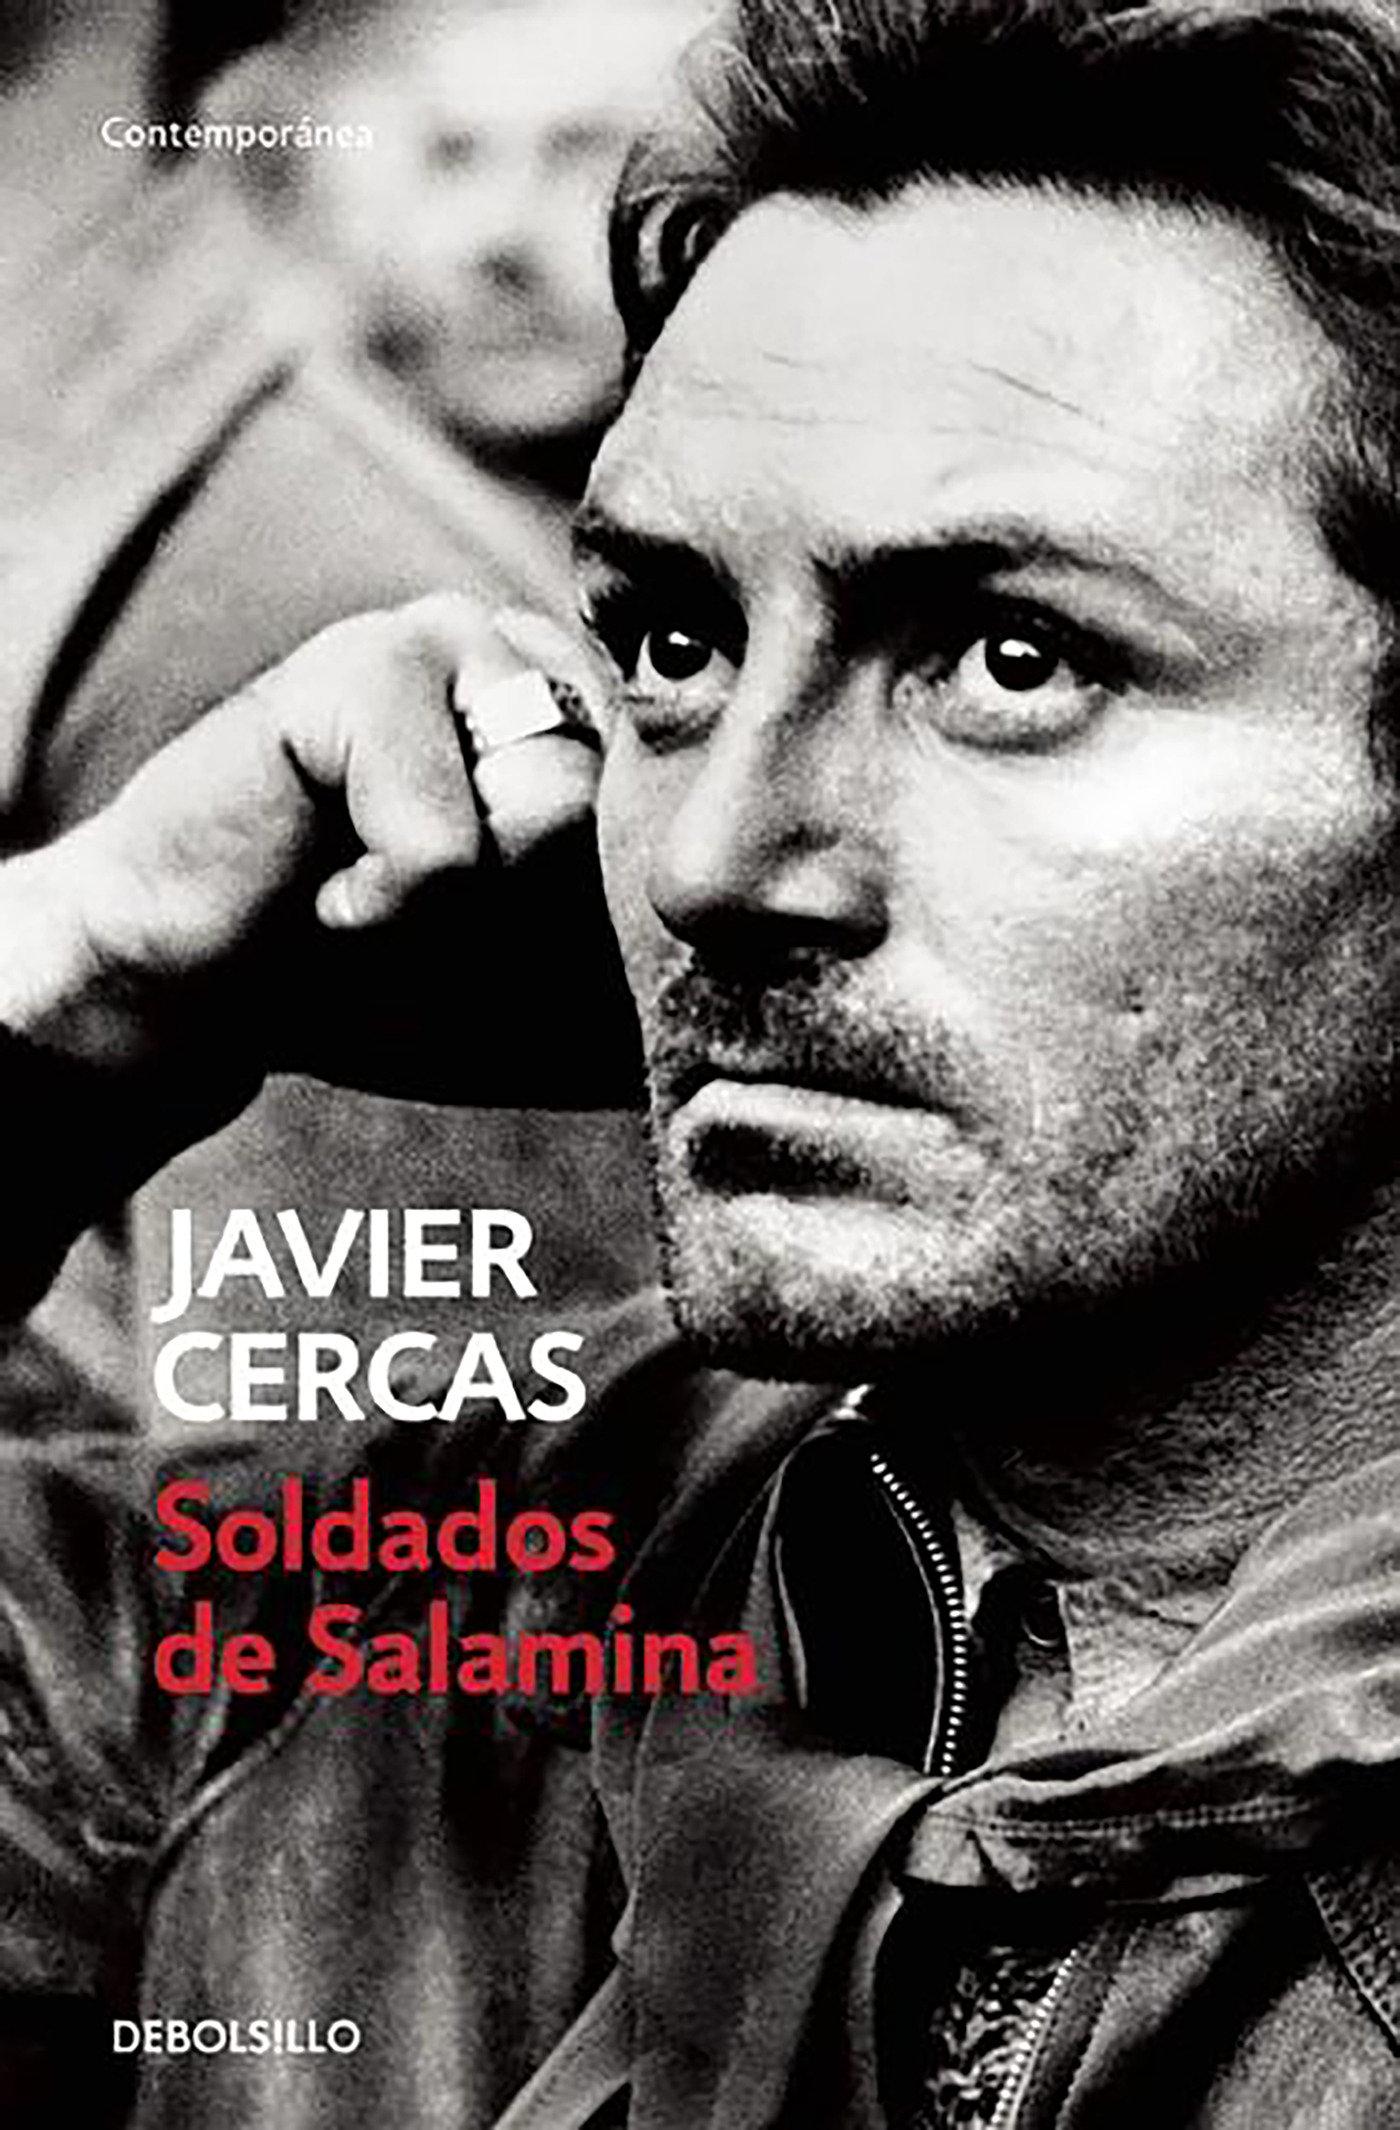 Soldados de Salamina / Soldiers of Salamis: Ausgezeichnet mit dem Independent Foreign Fiction Prize 2004 (Contemporánea)